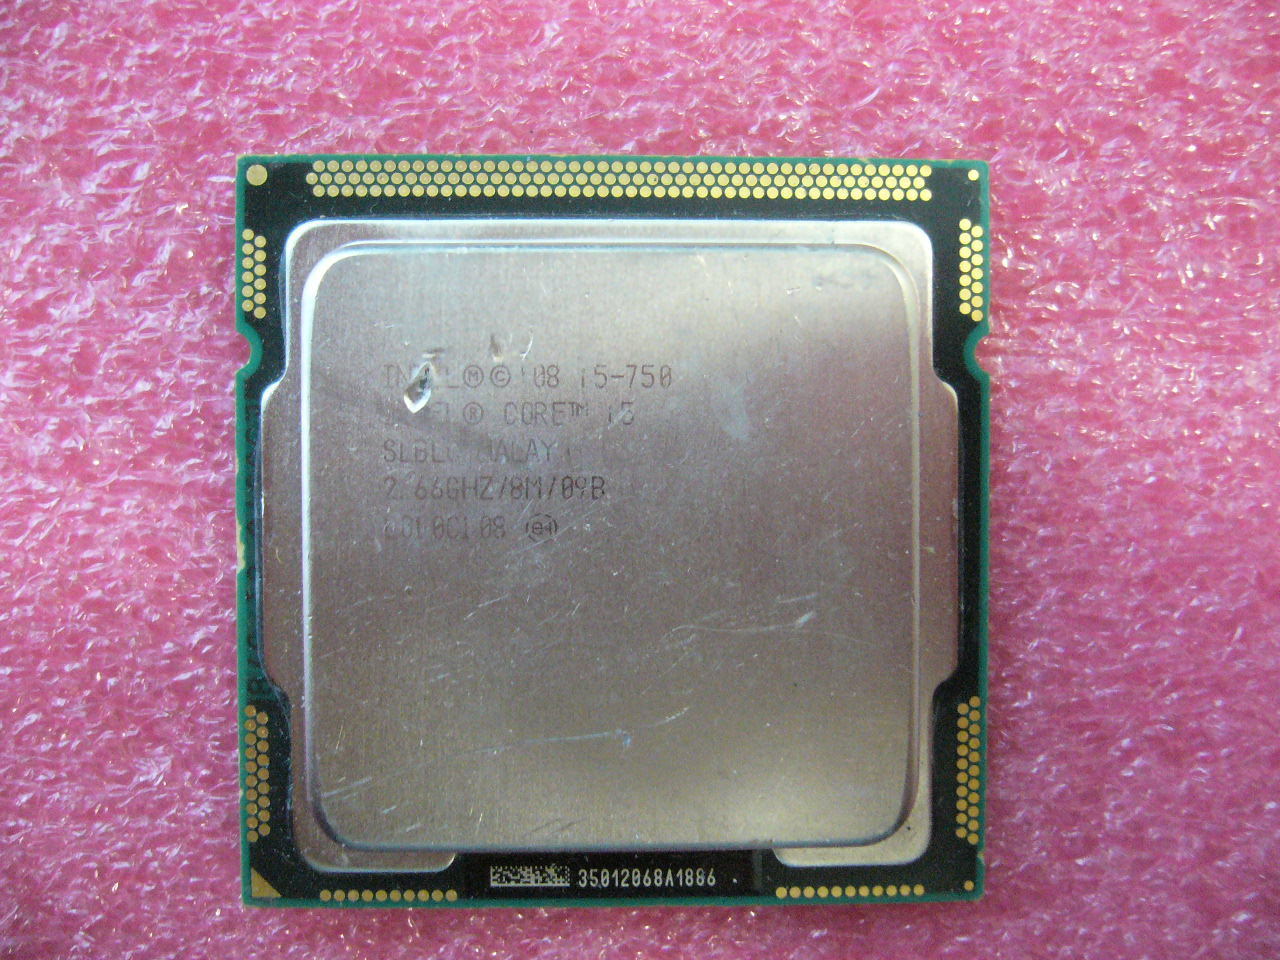 QTY 1x Intel CPU i5-750 Quad-Cores 2.66Ghz/8MB LGA1156 SLBLC - Click Image to Close